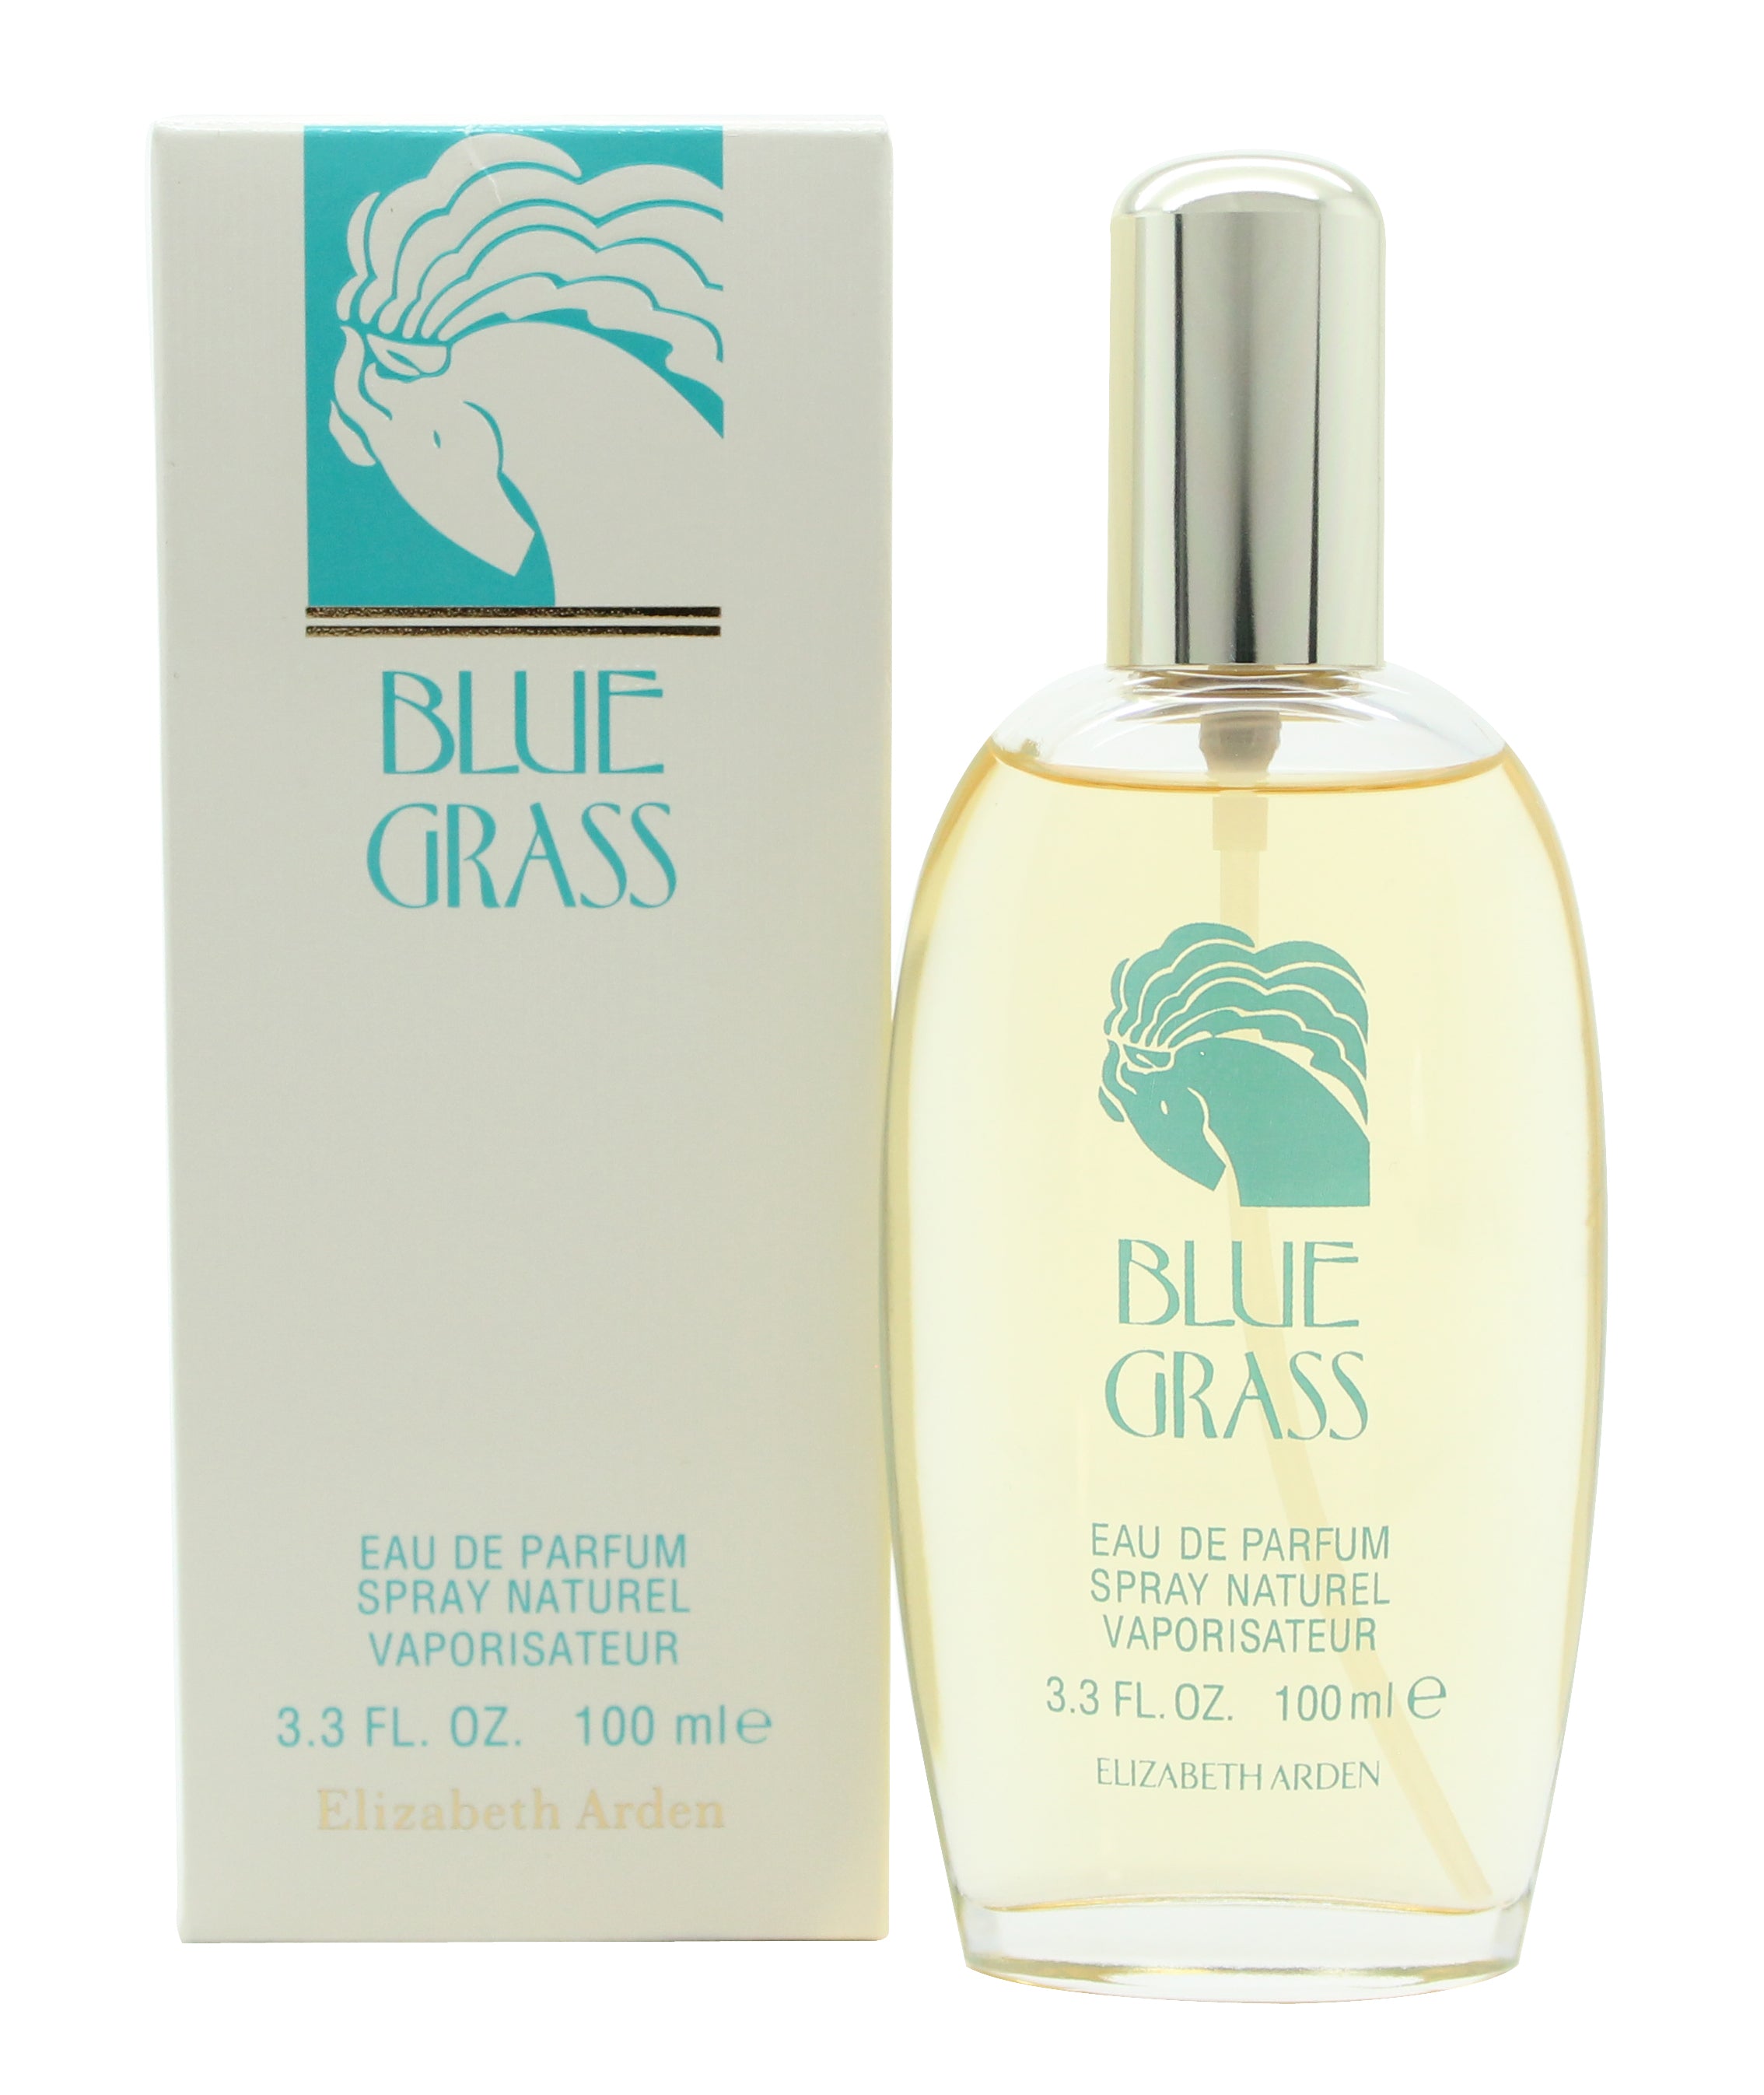 View Elizabeth Arden Blue Grass Eau de Parfum 100ml Spray information